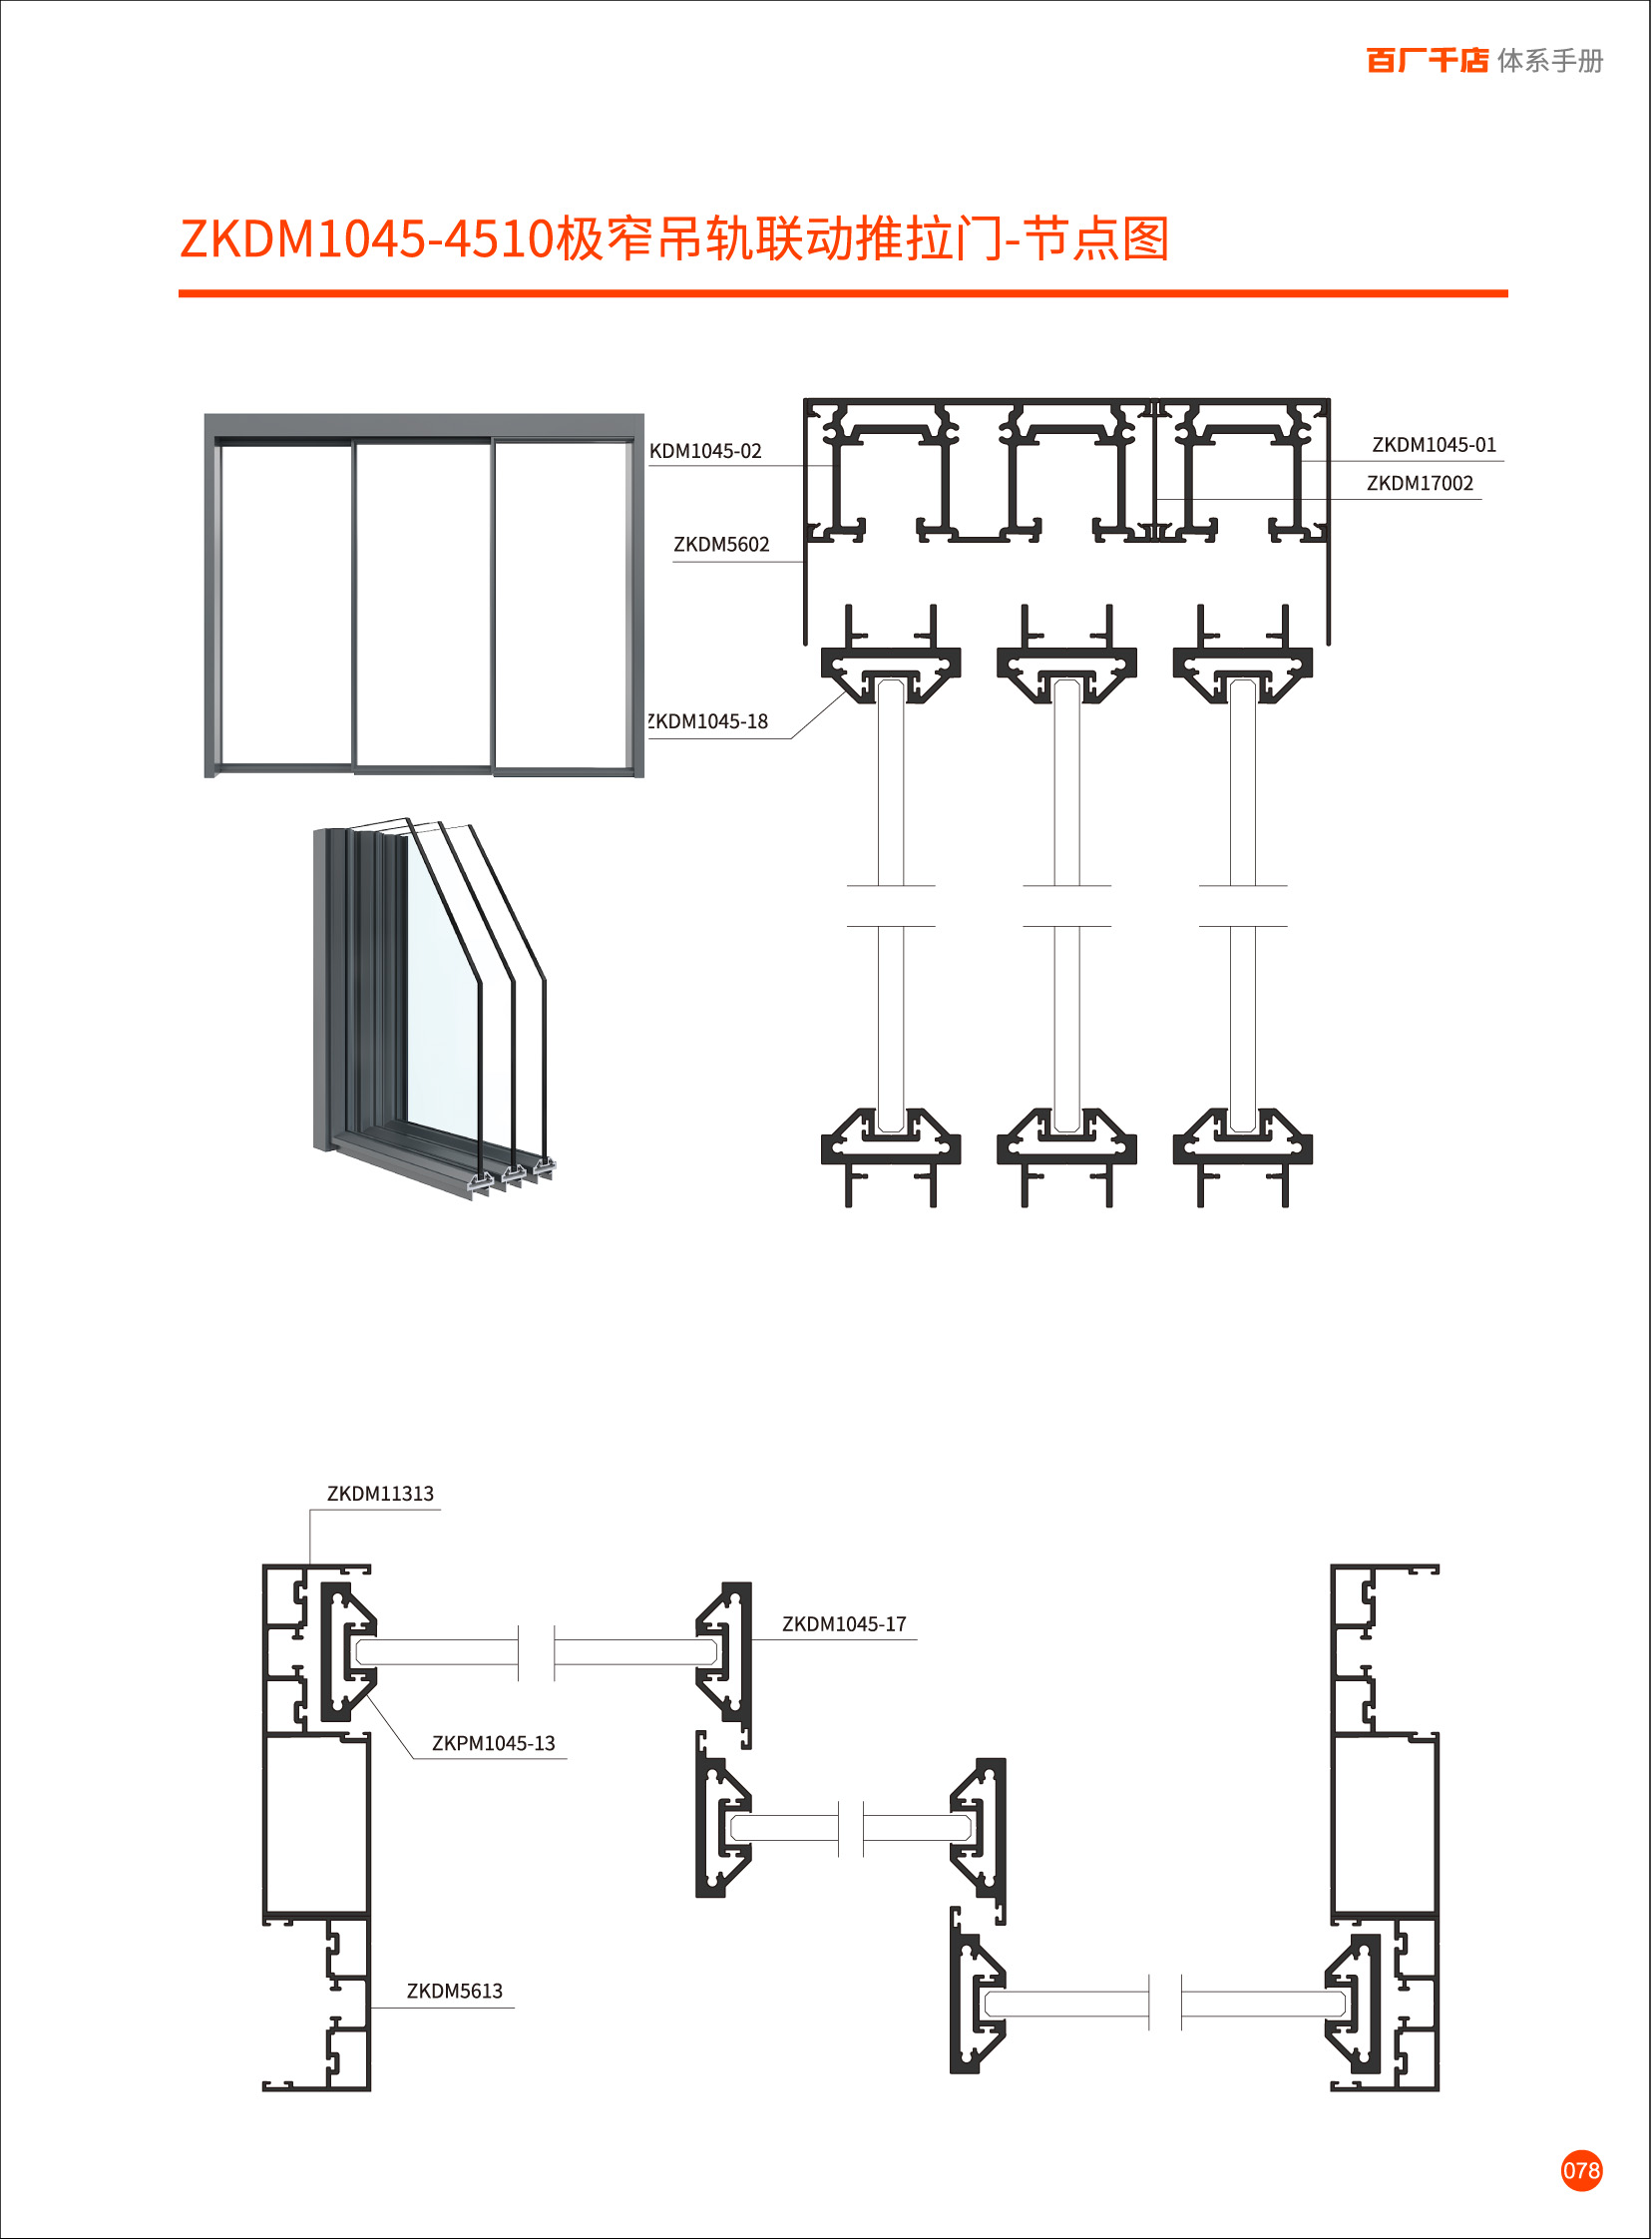 Zkdm1045-4510 extremely narrow hanging rail linkage sliding door